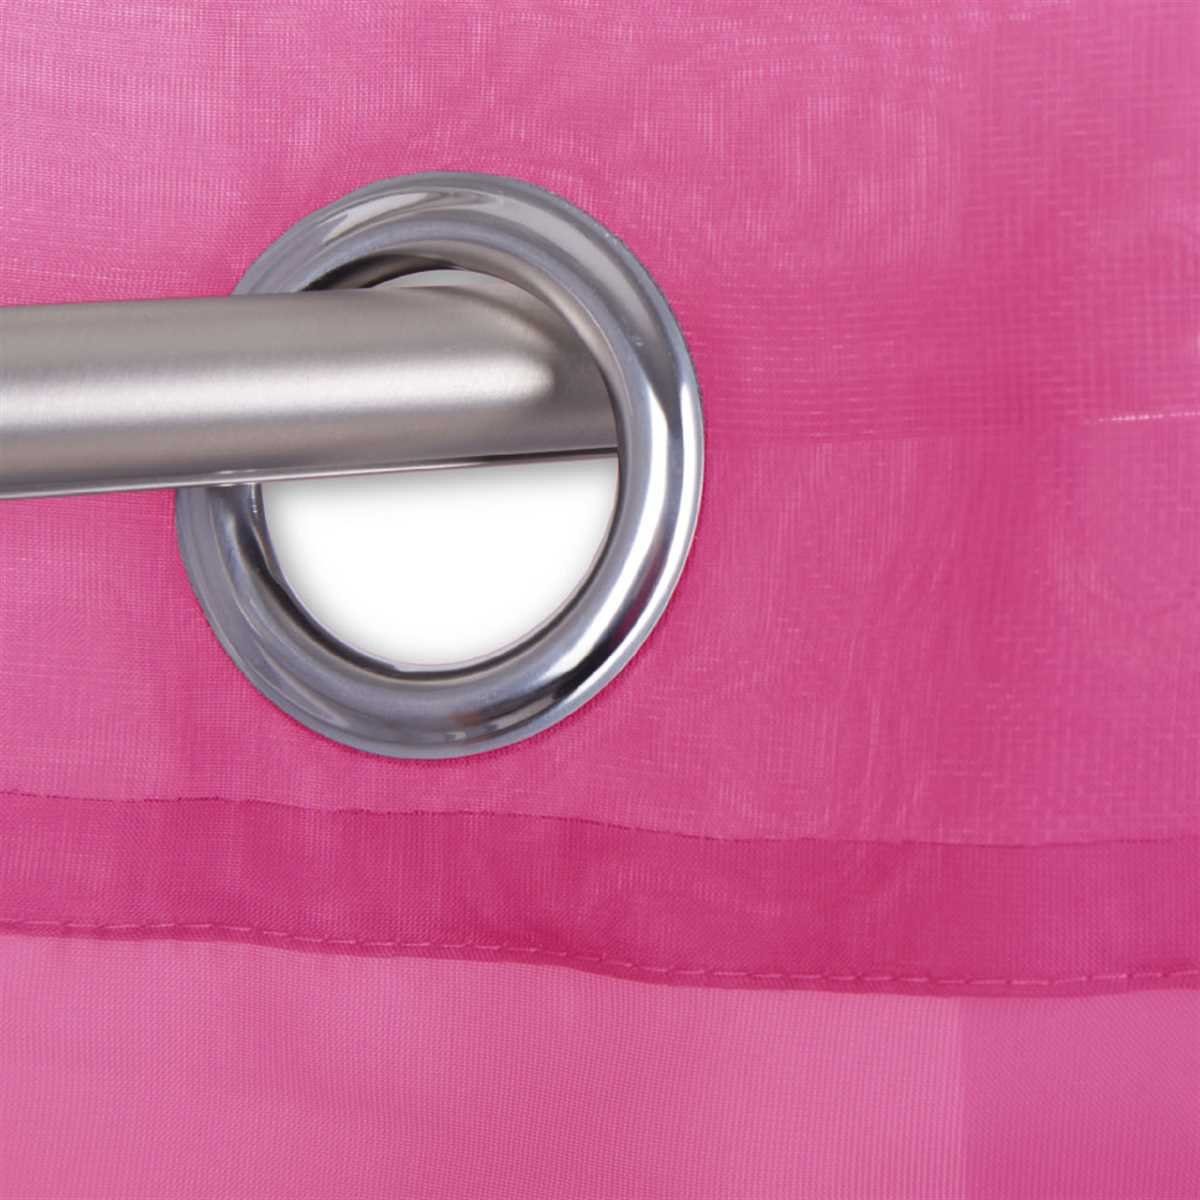 Vorhang, Bestlivings, Ösen (2 St), Voile, Gardinenset "Transparent" Ösenschals) Pink transparent, (2